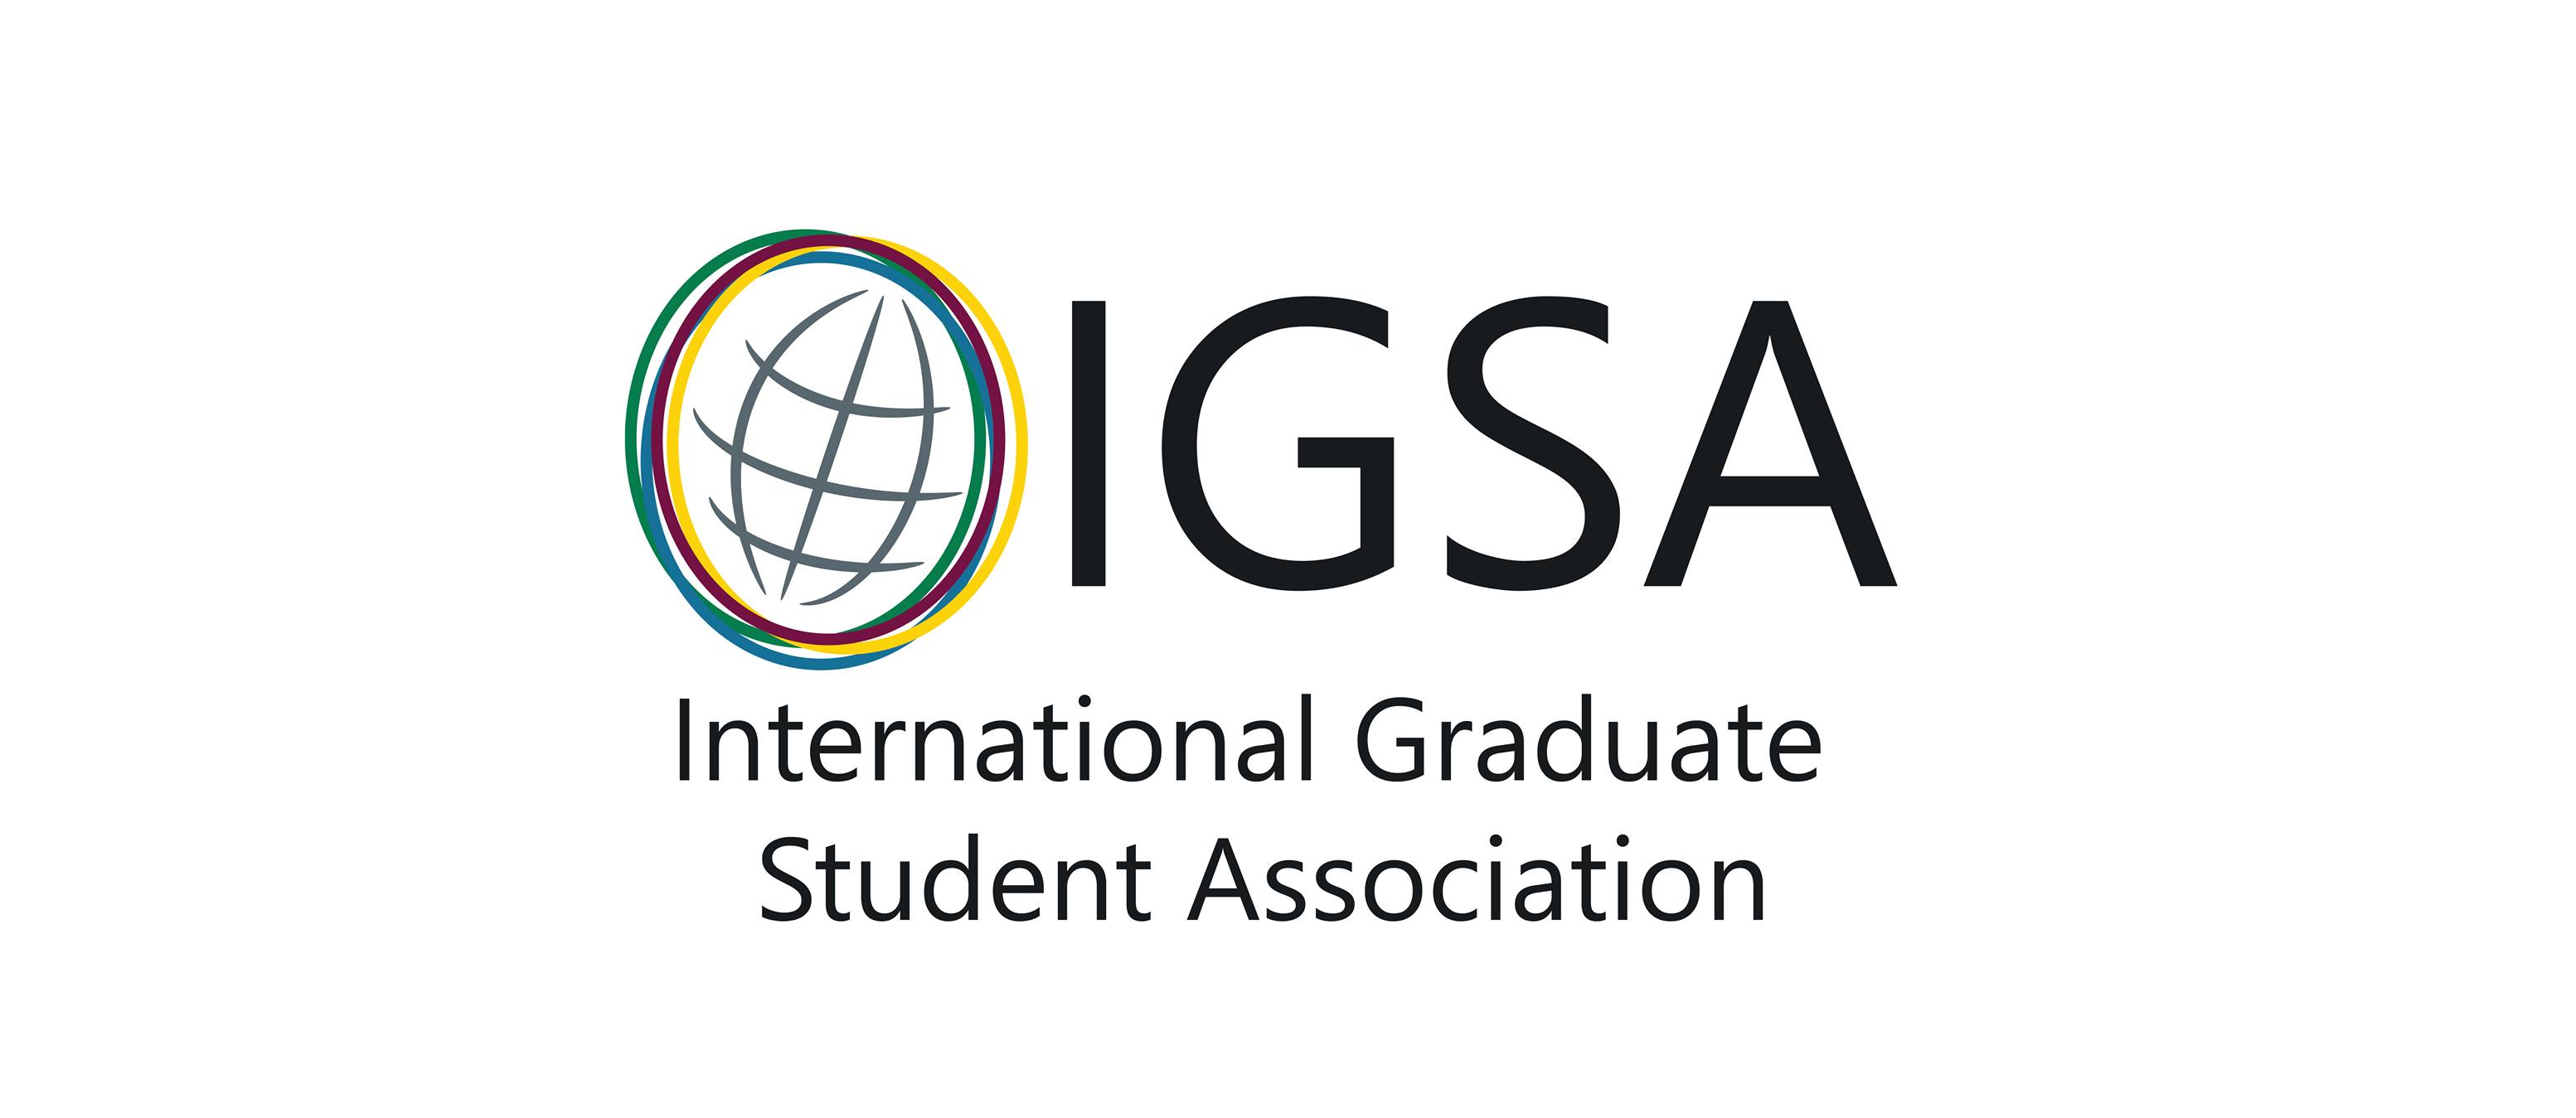 _images/IGSA_logo.jpg